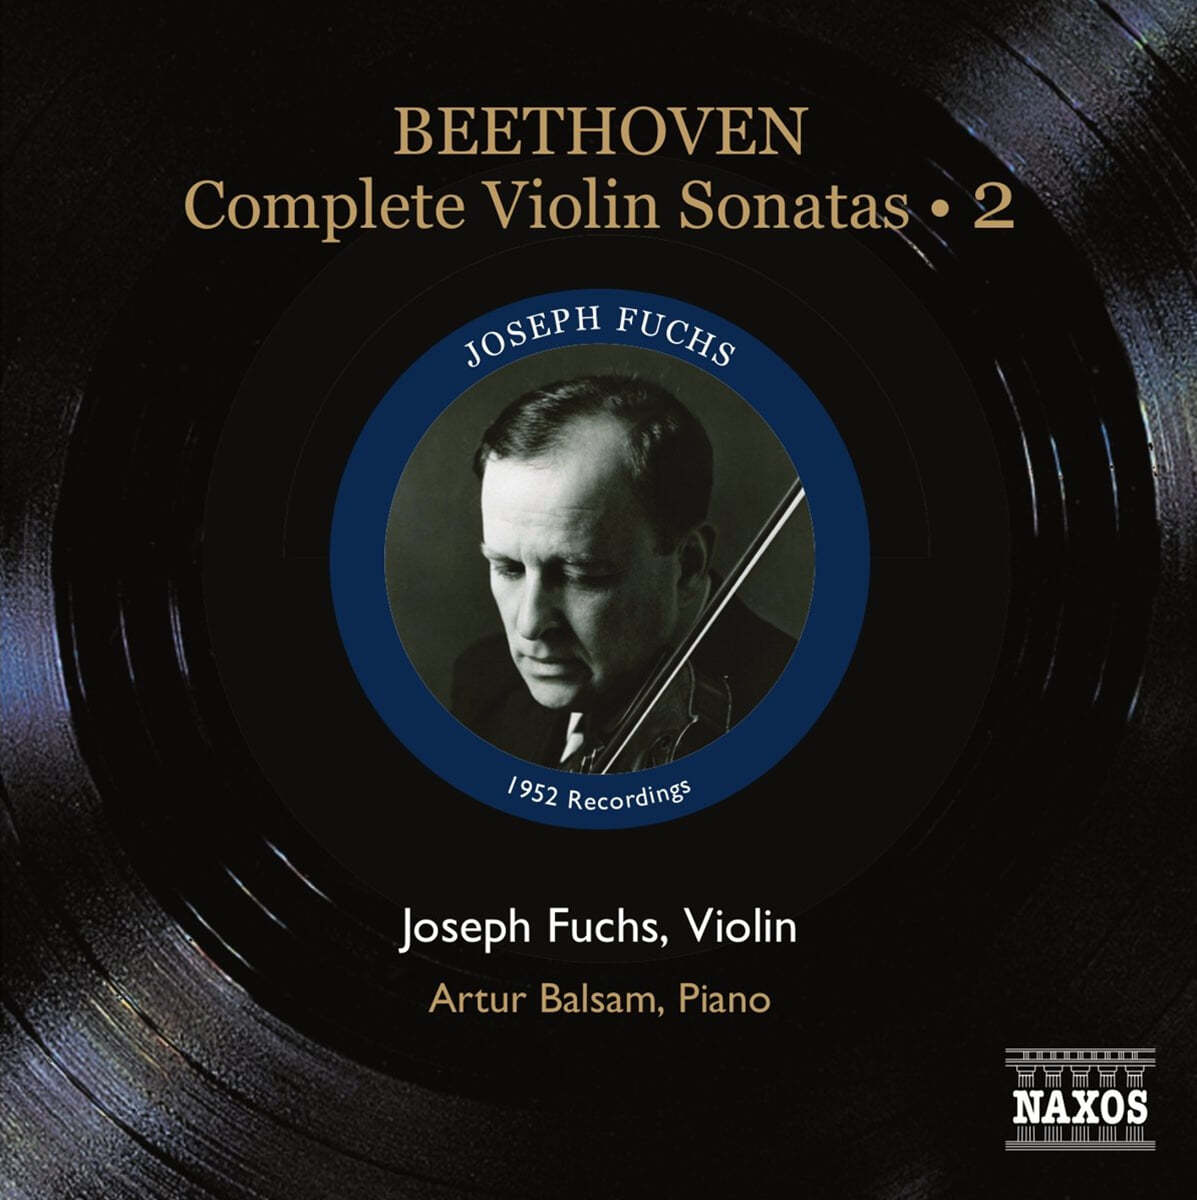 Artur Balsam 베토벤: 바이올린 소나타 5, 6, 7번 (Beethoven: Violin Sonatas Op.24 'Spring', Op.30. No.1, Op.30 No.2)